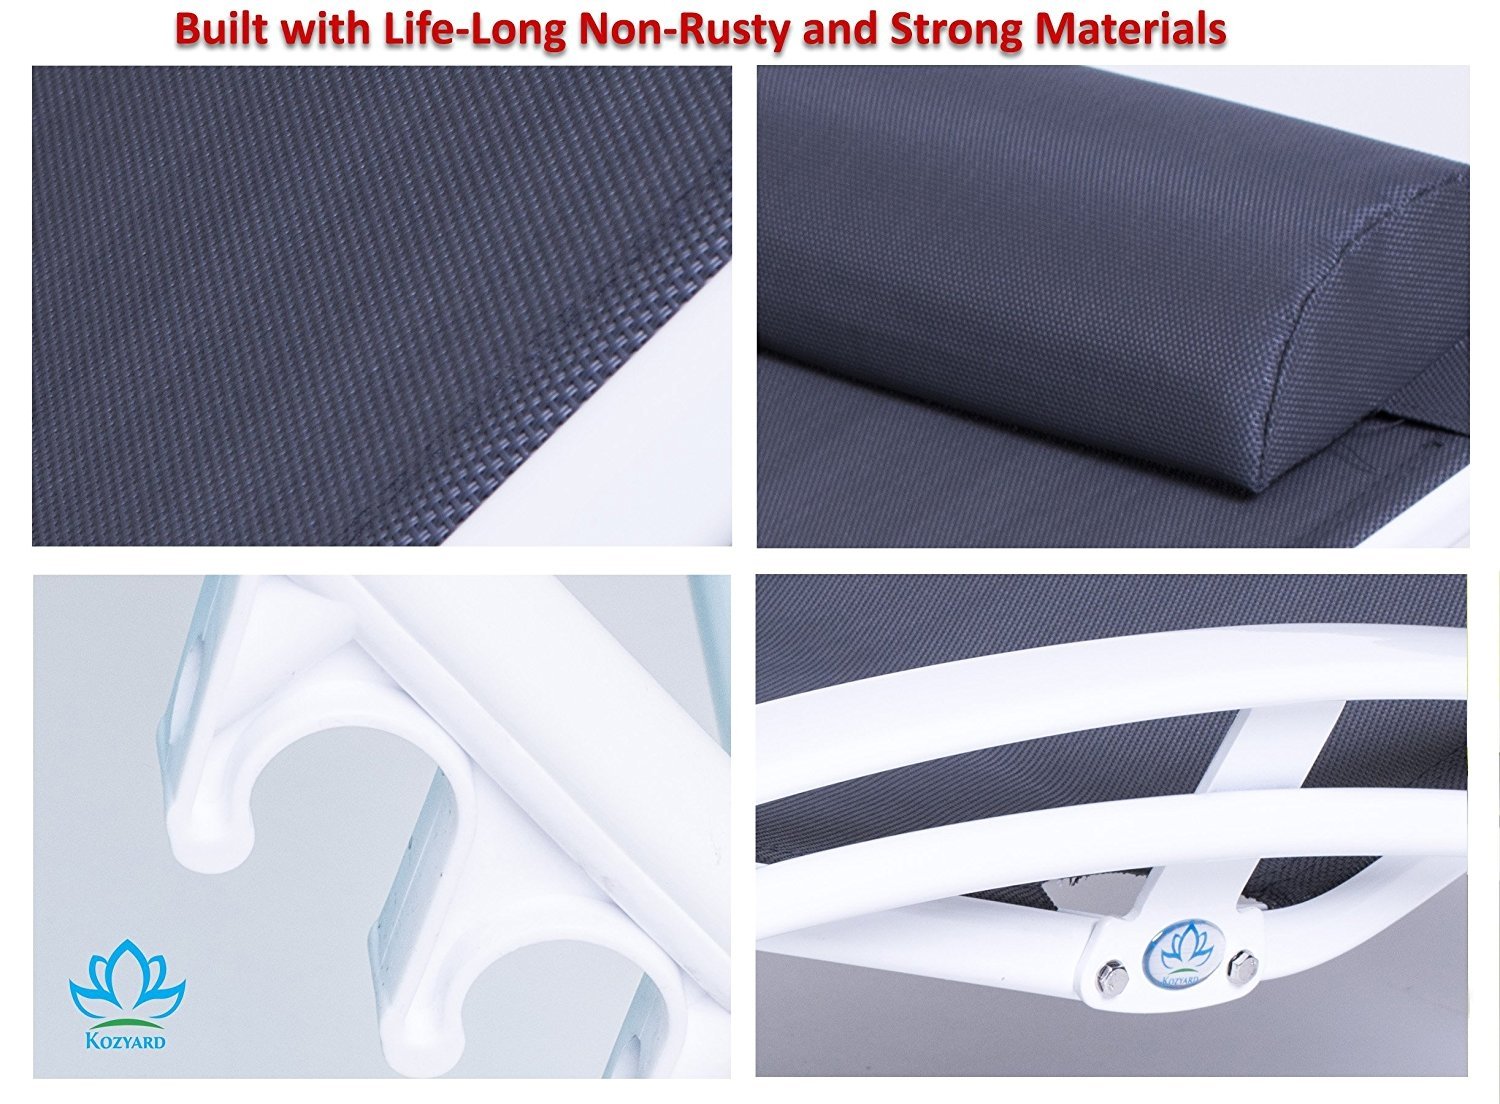 Kozyard Patio Reclining Adjustable Chaise Lounge Aluminum and Textilene Sunbathing Chair (2 Pack) - image 4 of 7